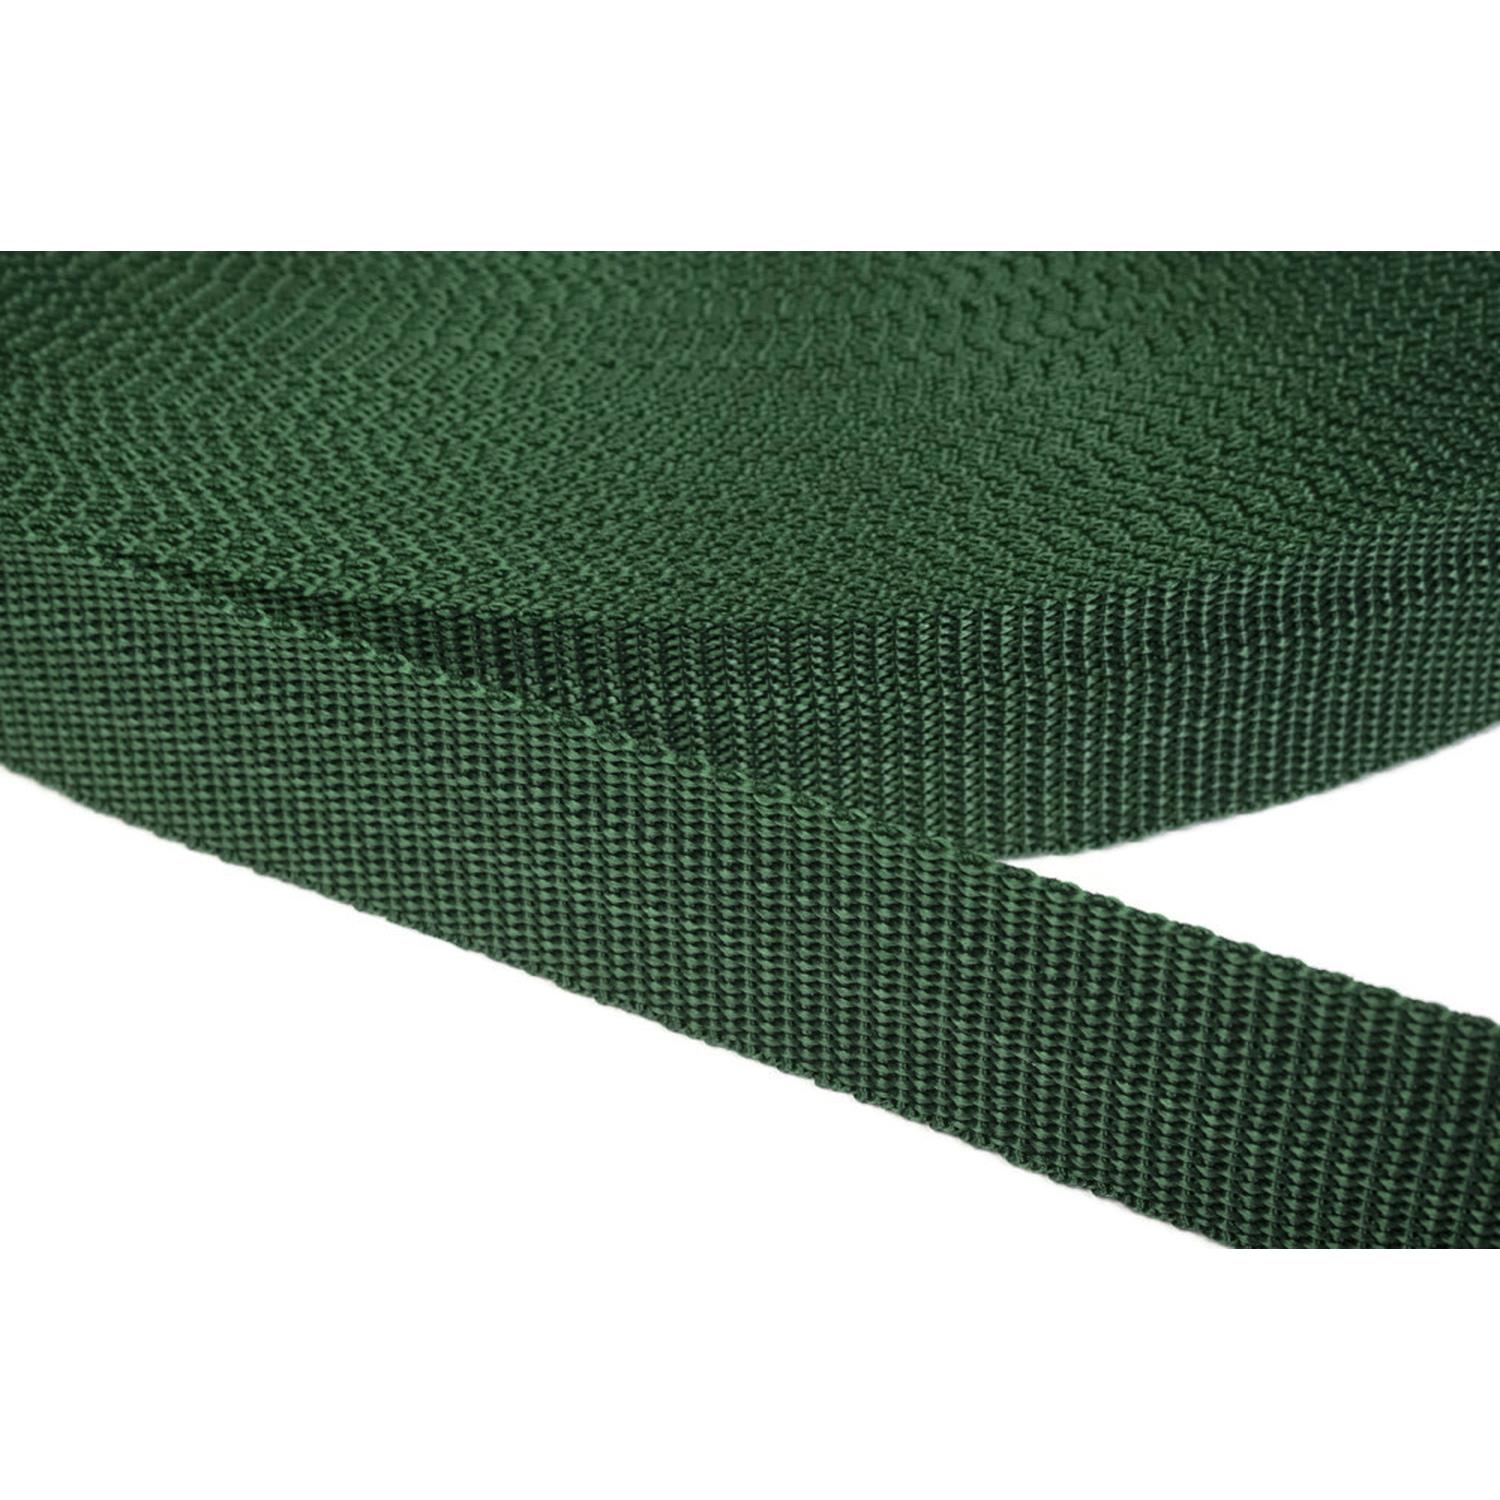 Gurtband 10mm breit aus Polypropylen in 41 Farben 35 - dunkelgrün 12 Meter